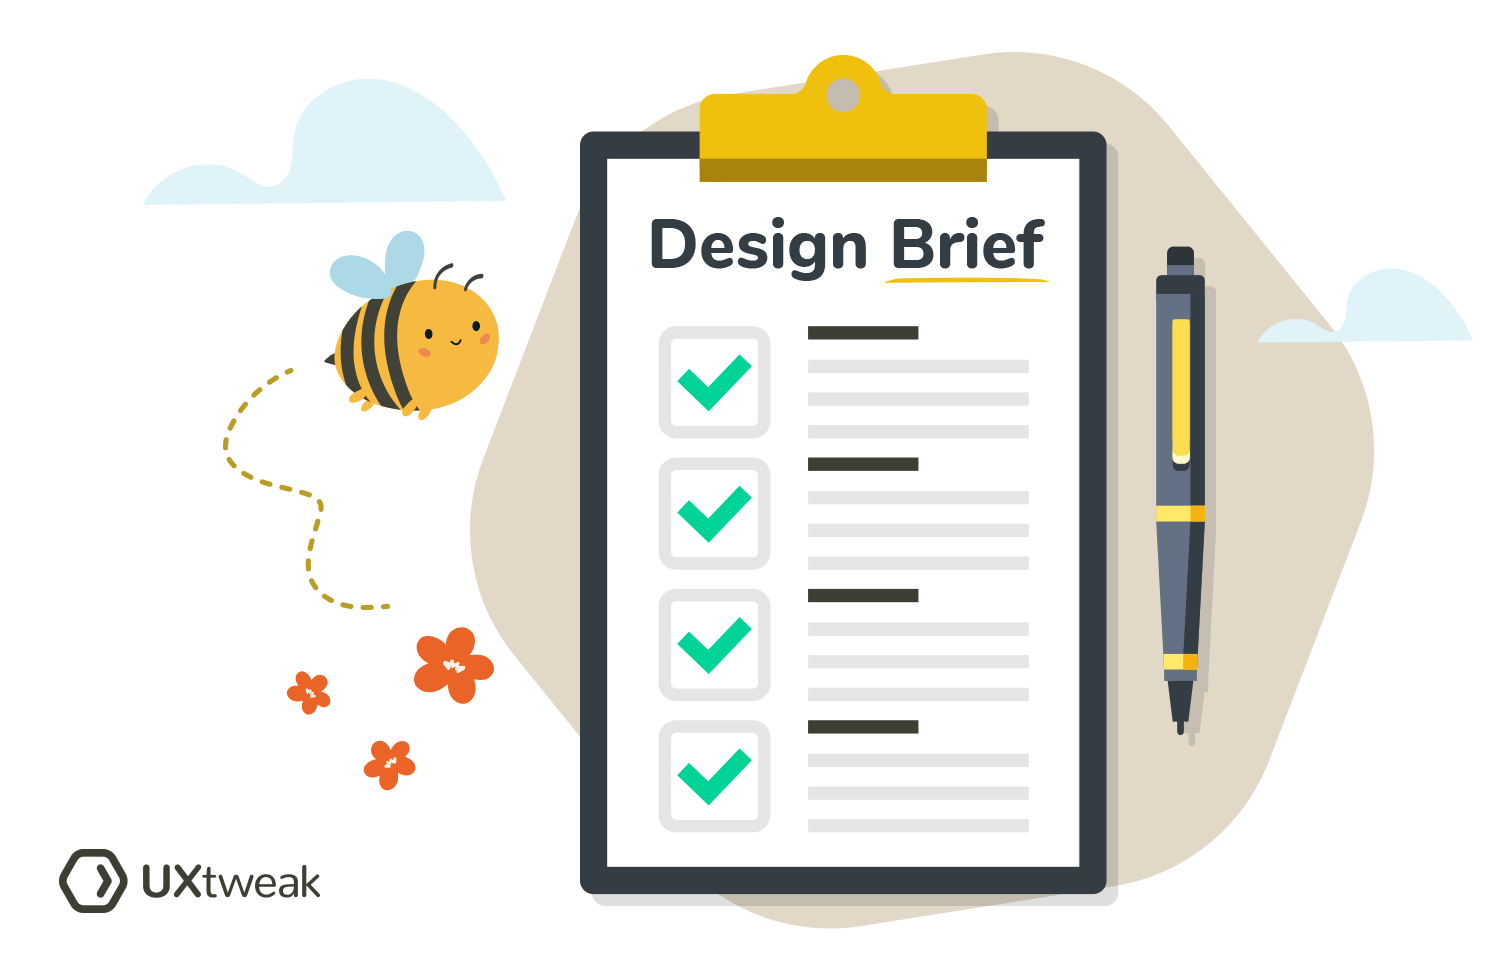 A design brief